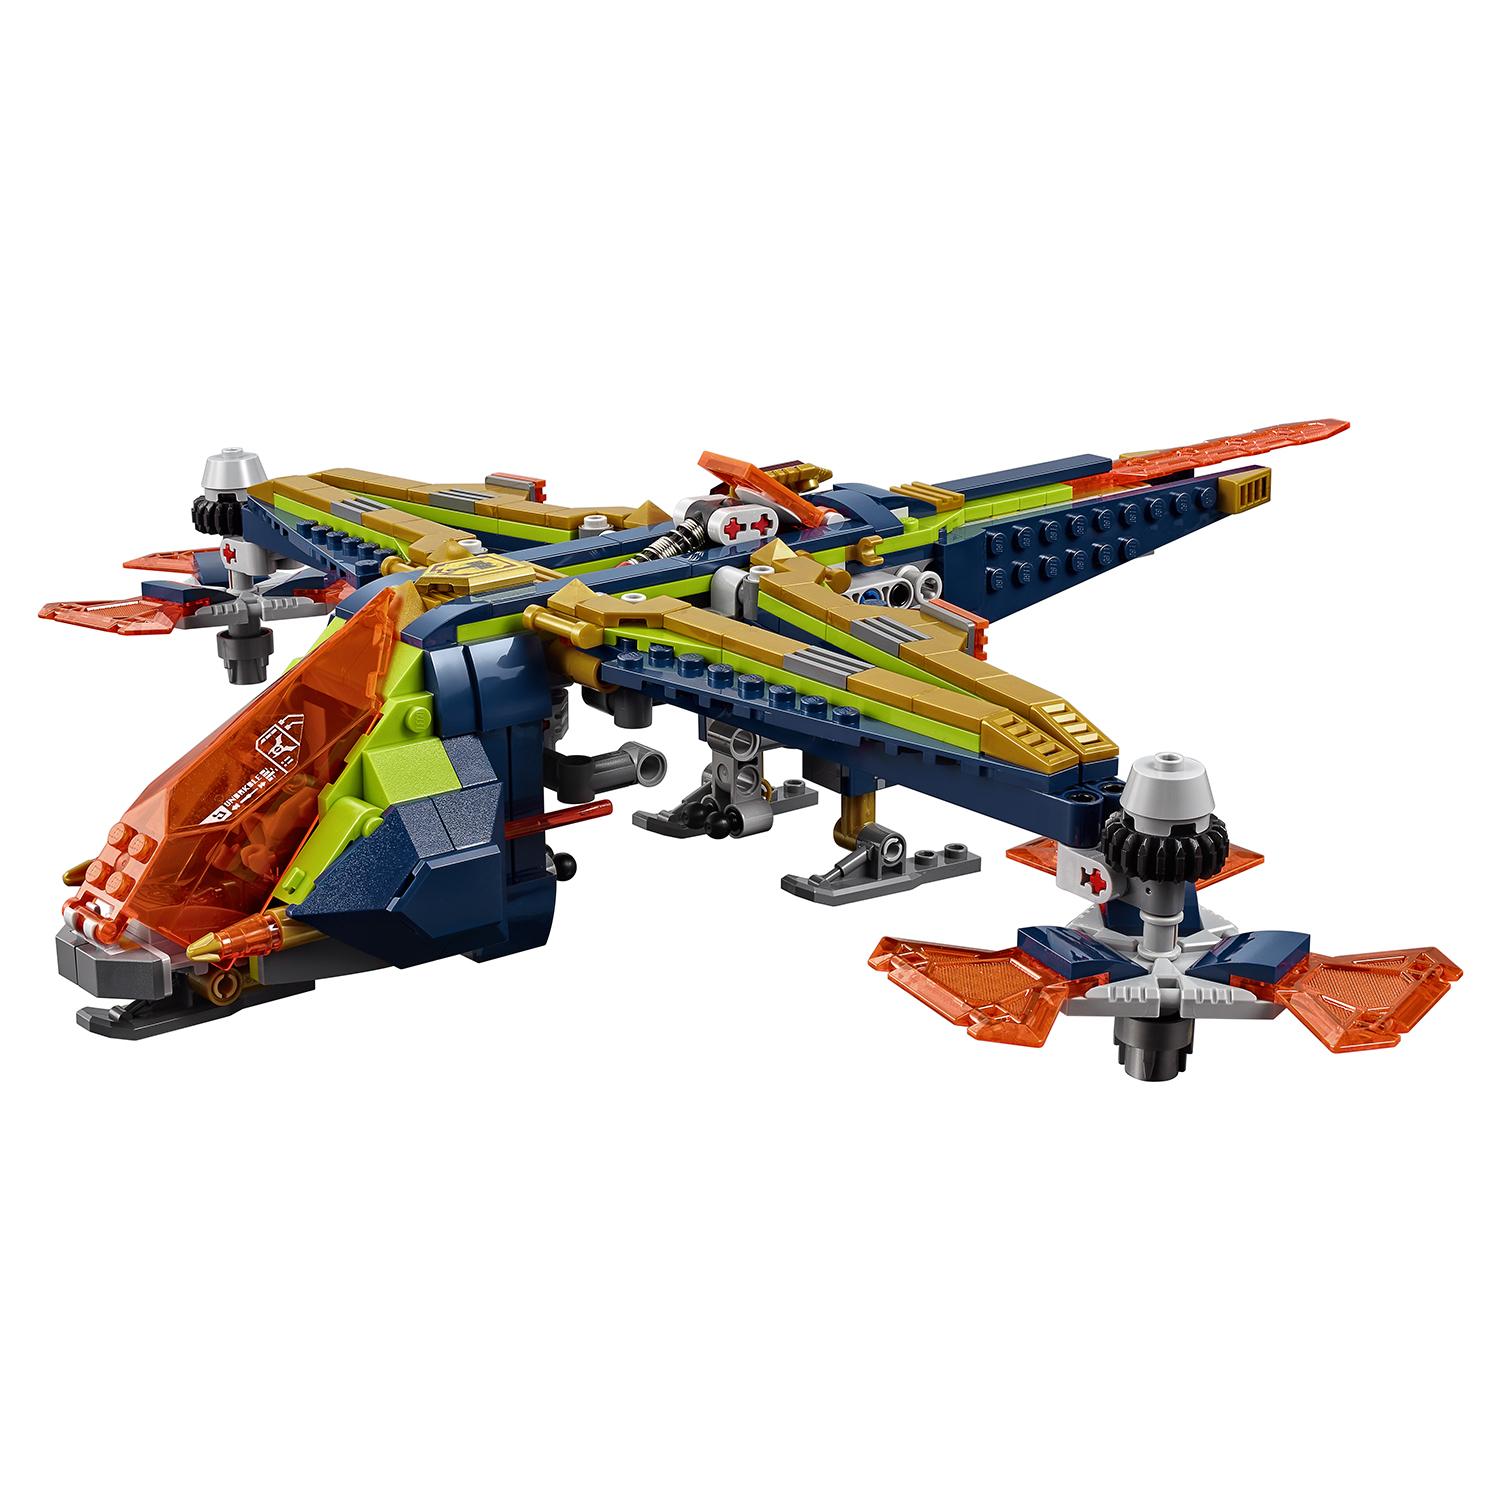 Lego Nexo Knights 72005 Аэро-арбалет Аарона